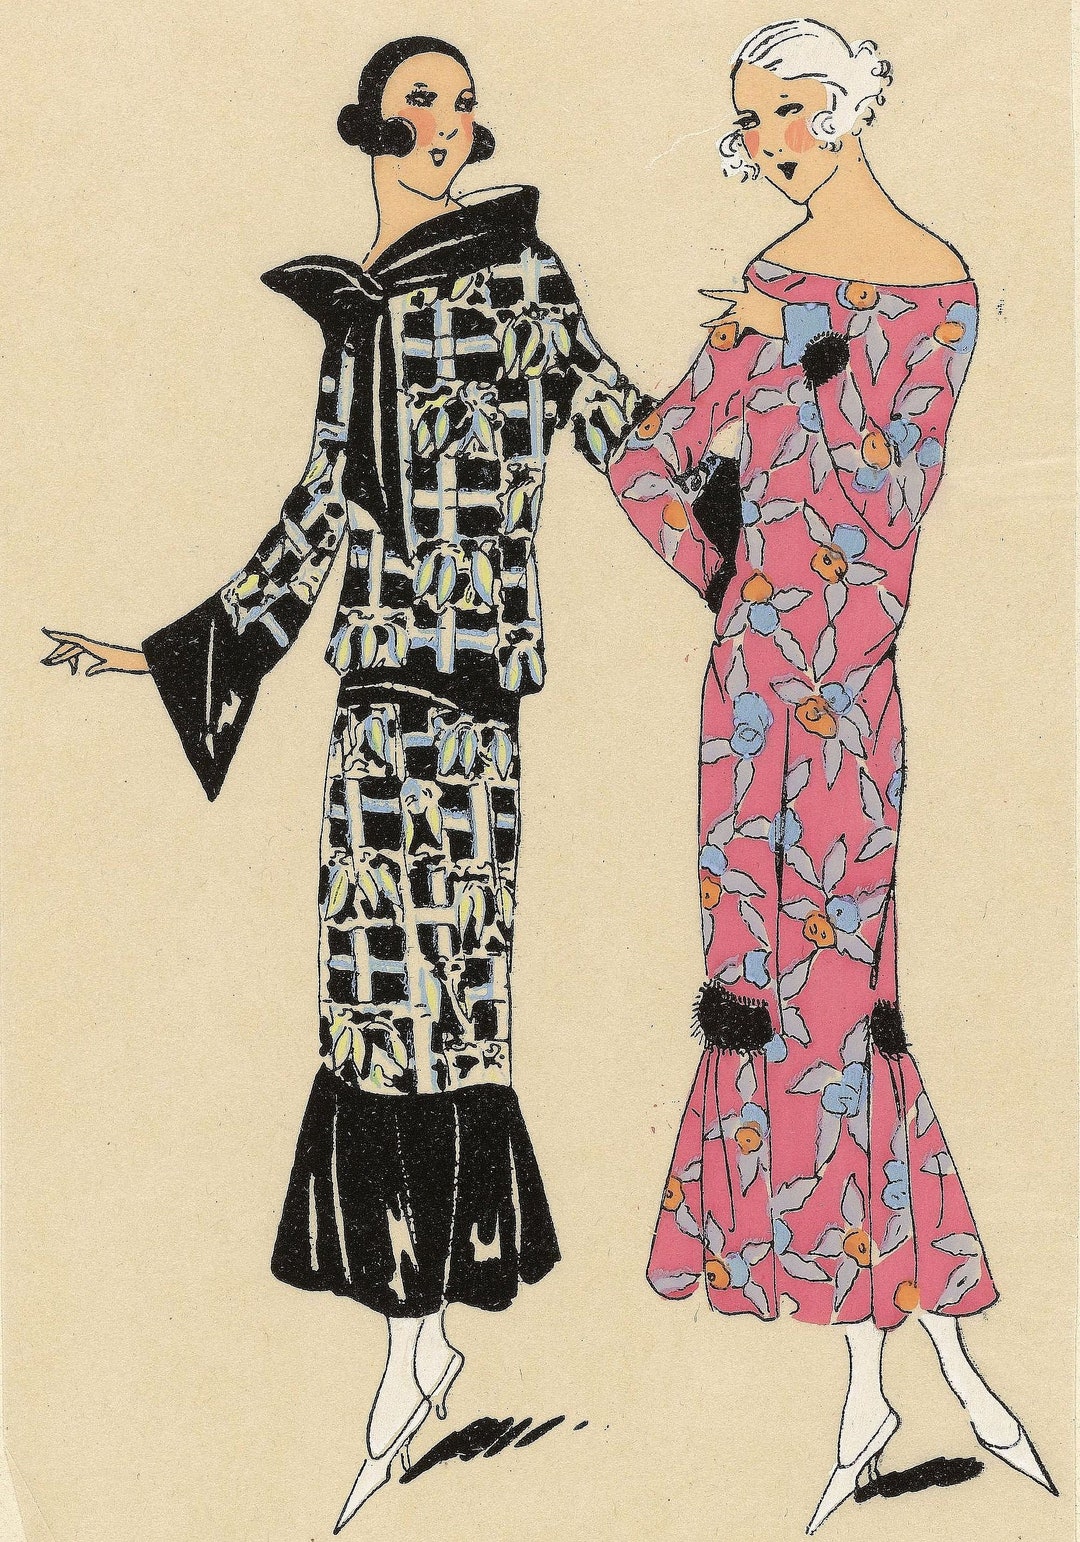 Snap 1920s Paris Women Friends Talk in Style. Prints Cards - Etsy